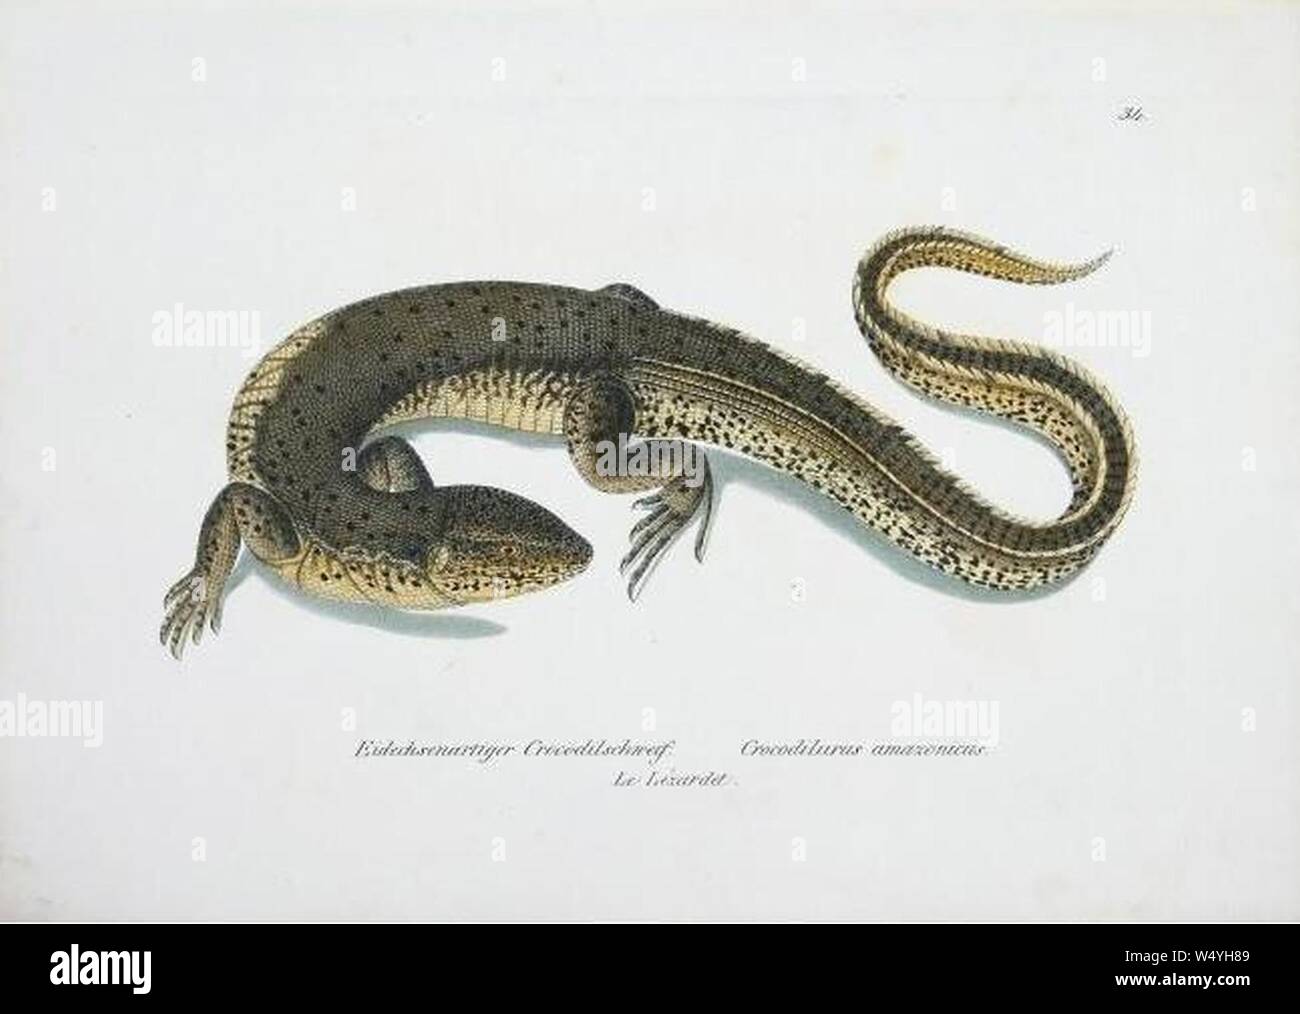 Crocodilurus amazonicus Schinz. Foto de stock